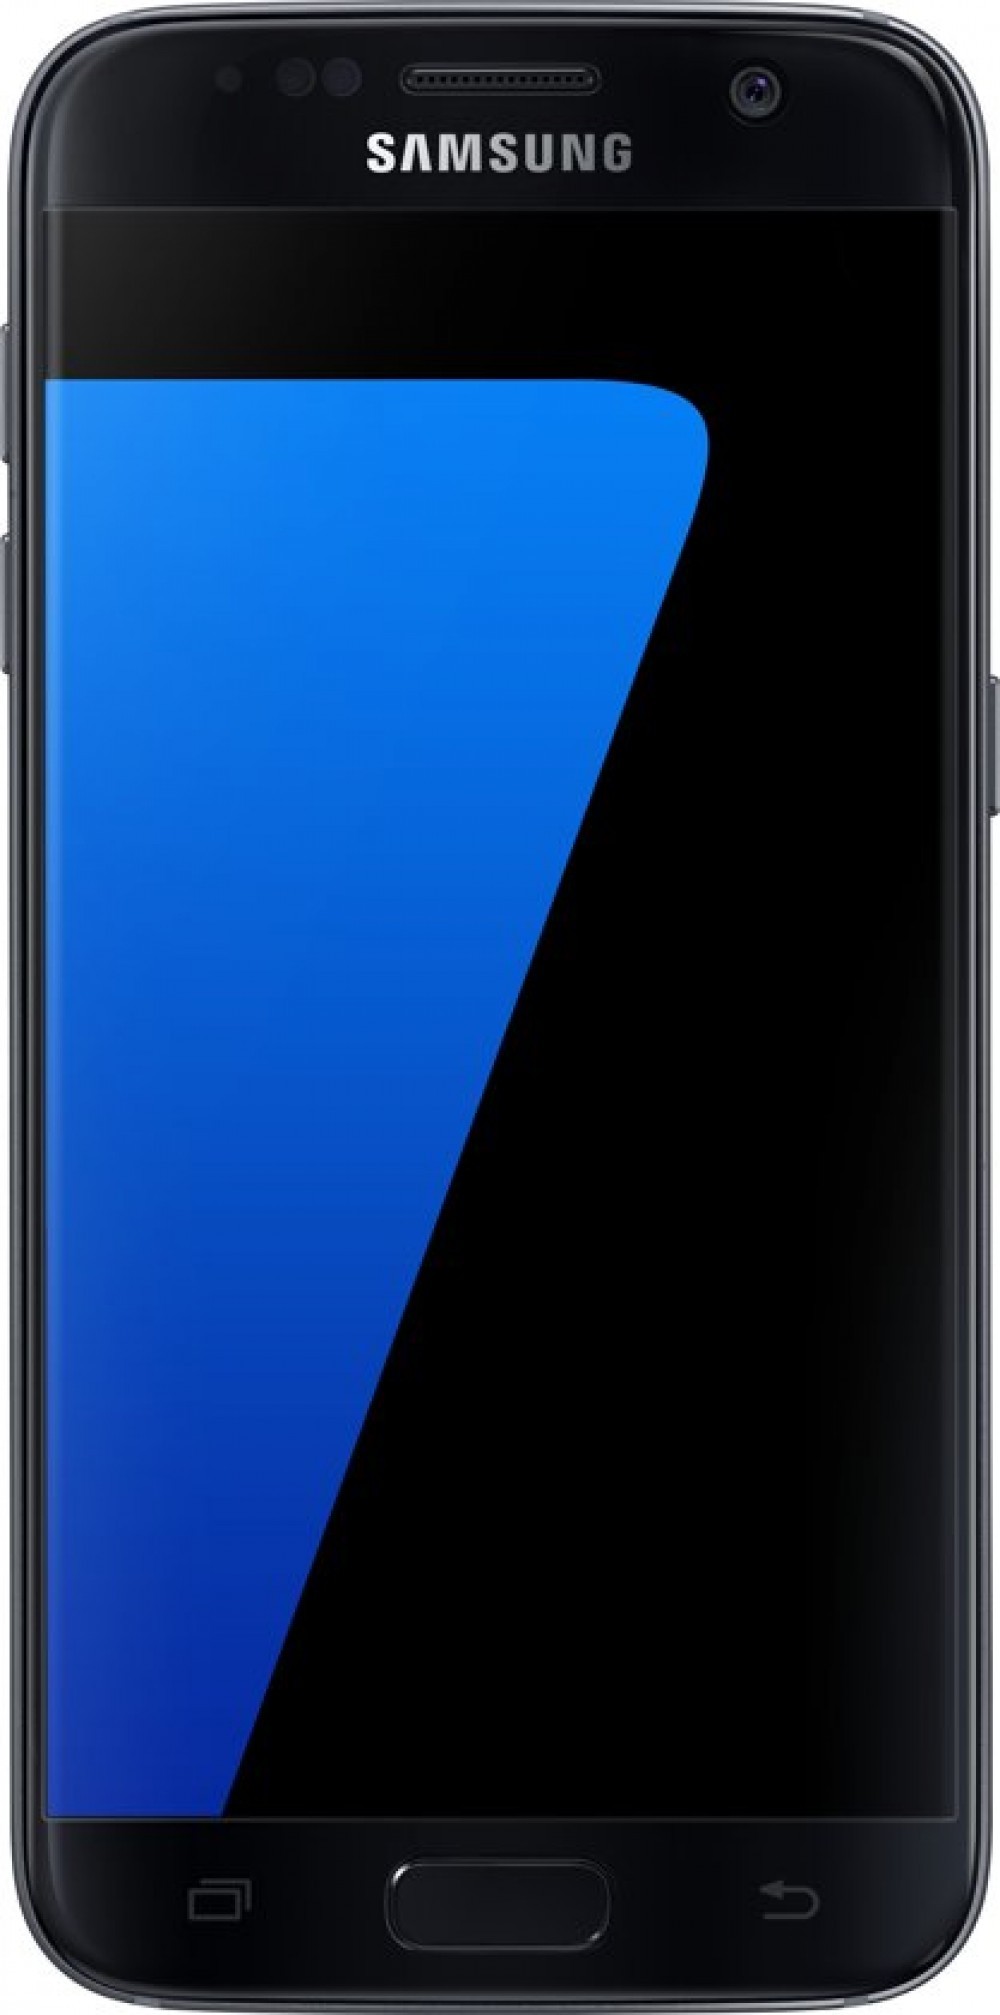 Galaxy S7 (G930F)